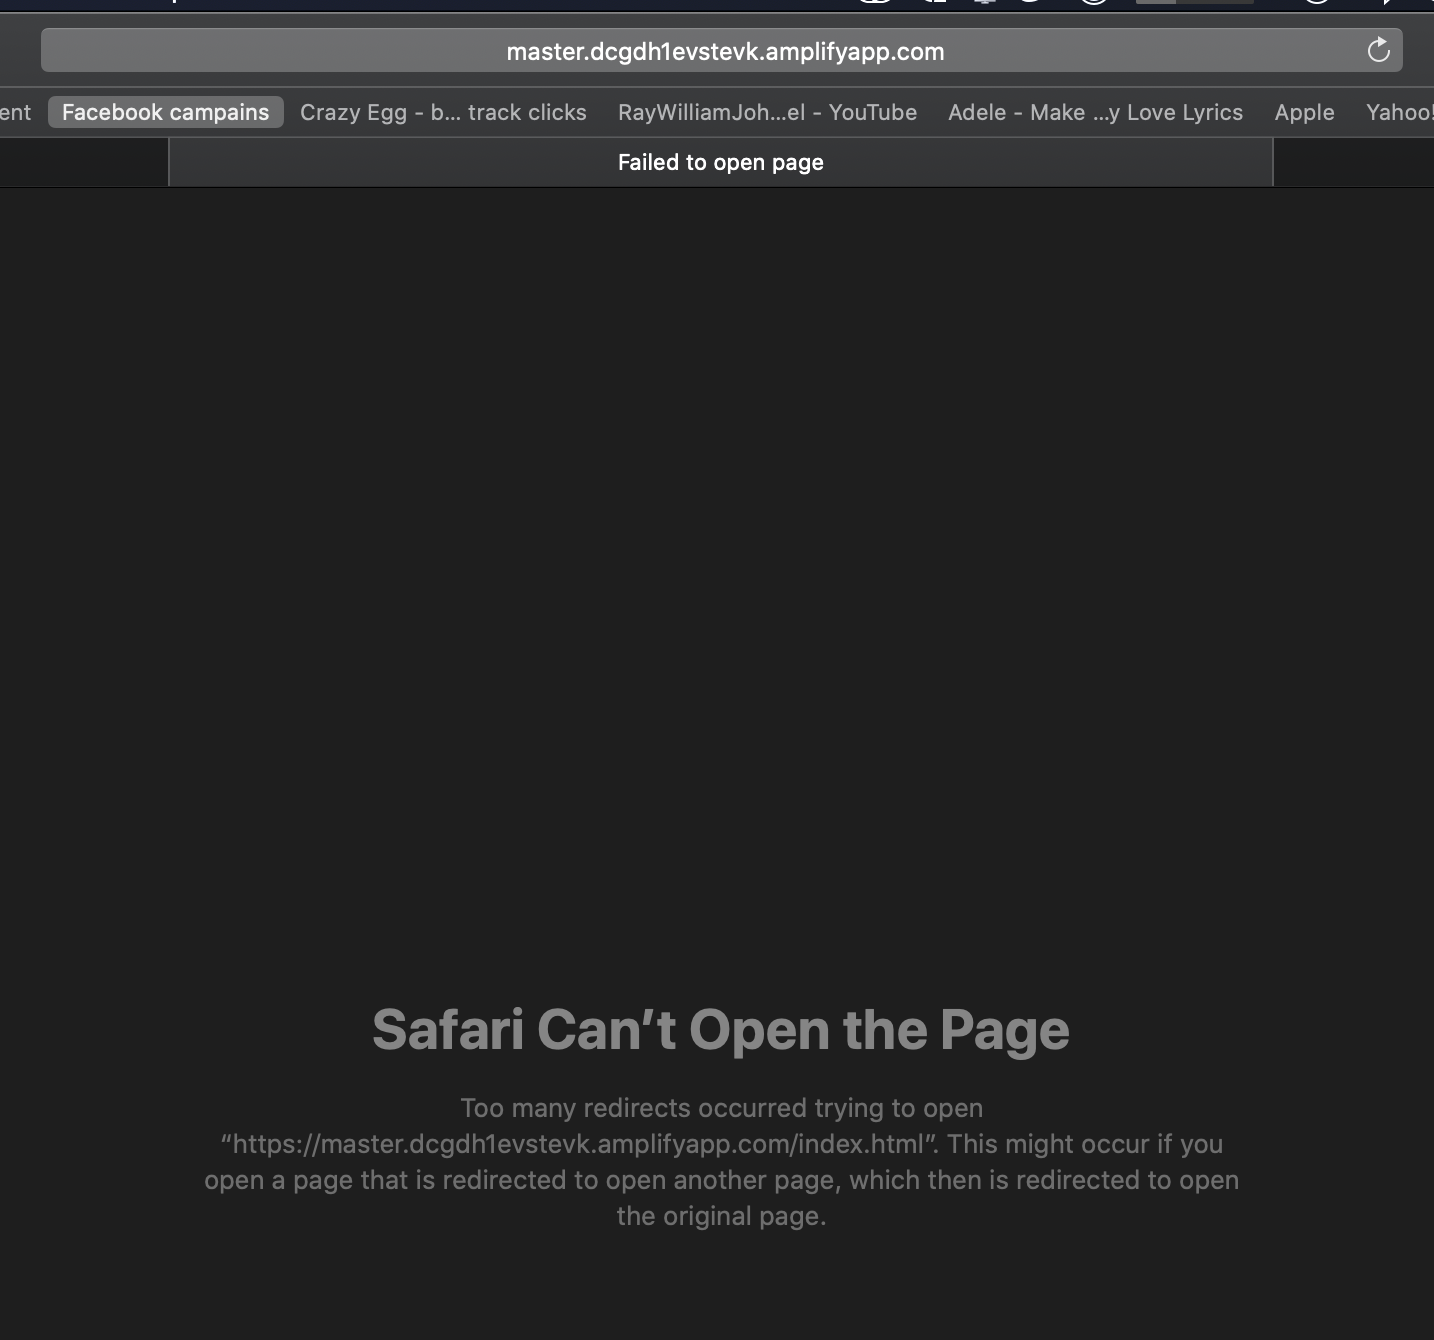 Safari failed to open page